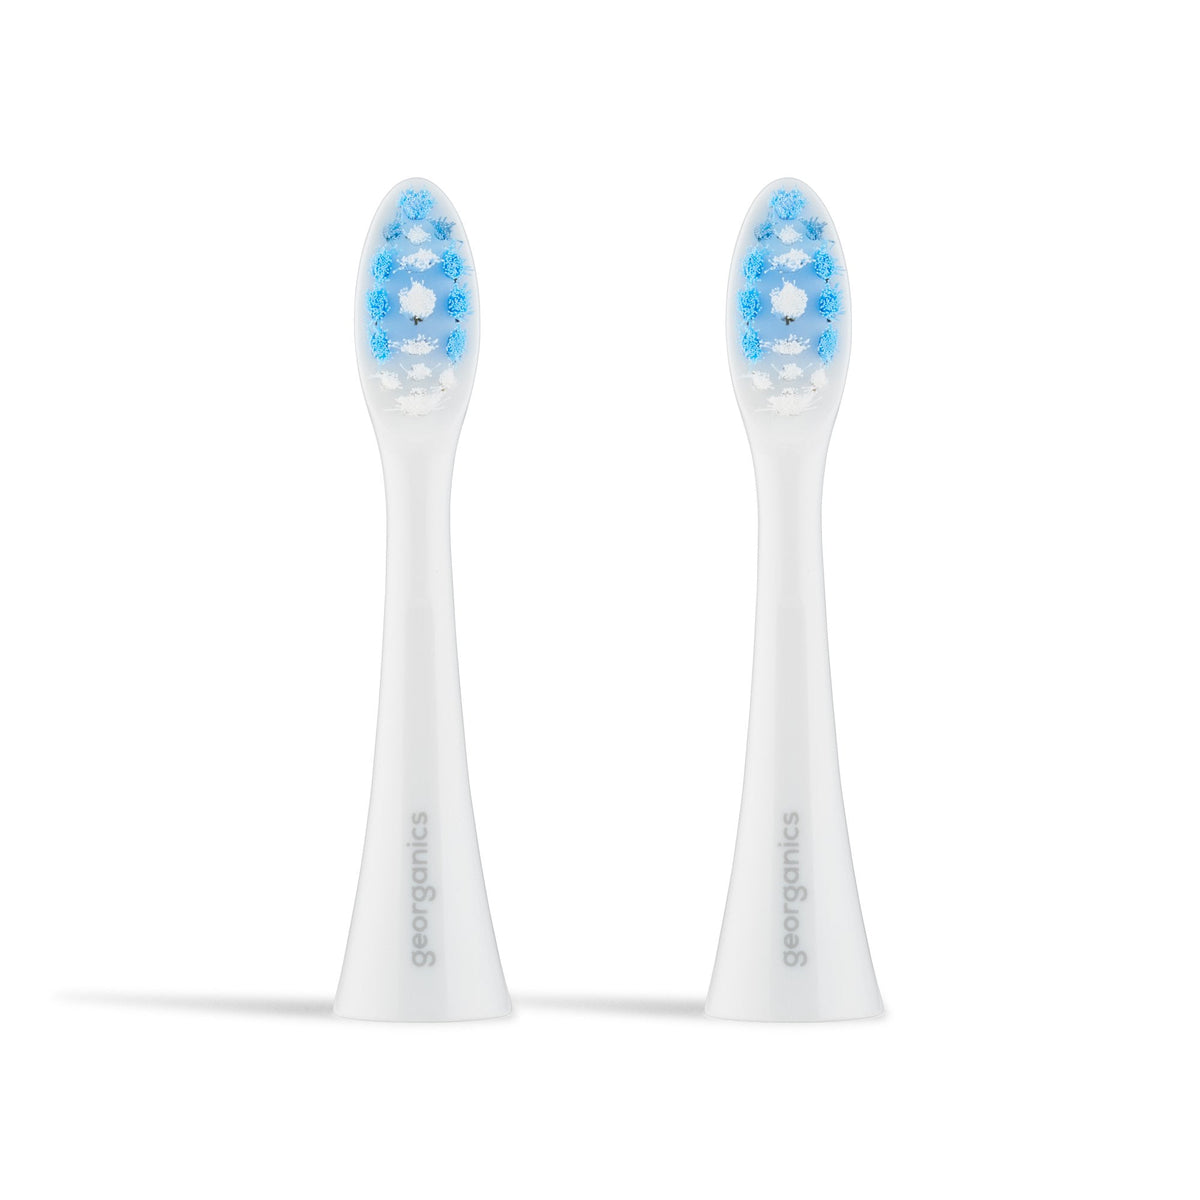 Sonic Toothbrush Heads - Medium Bristles - Georganics Oral Care